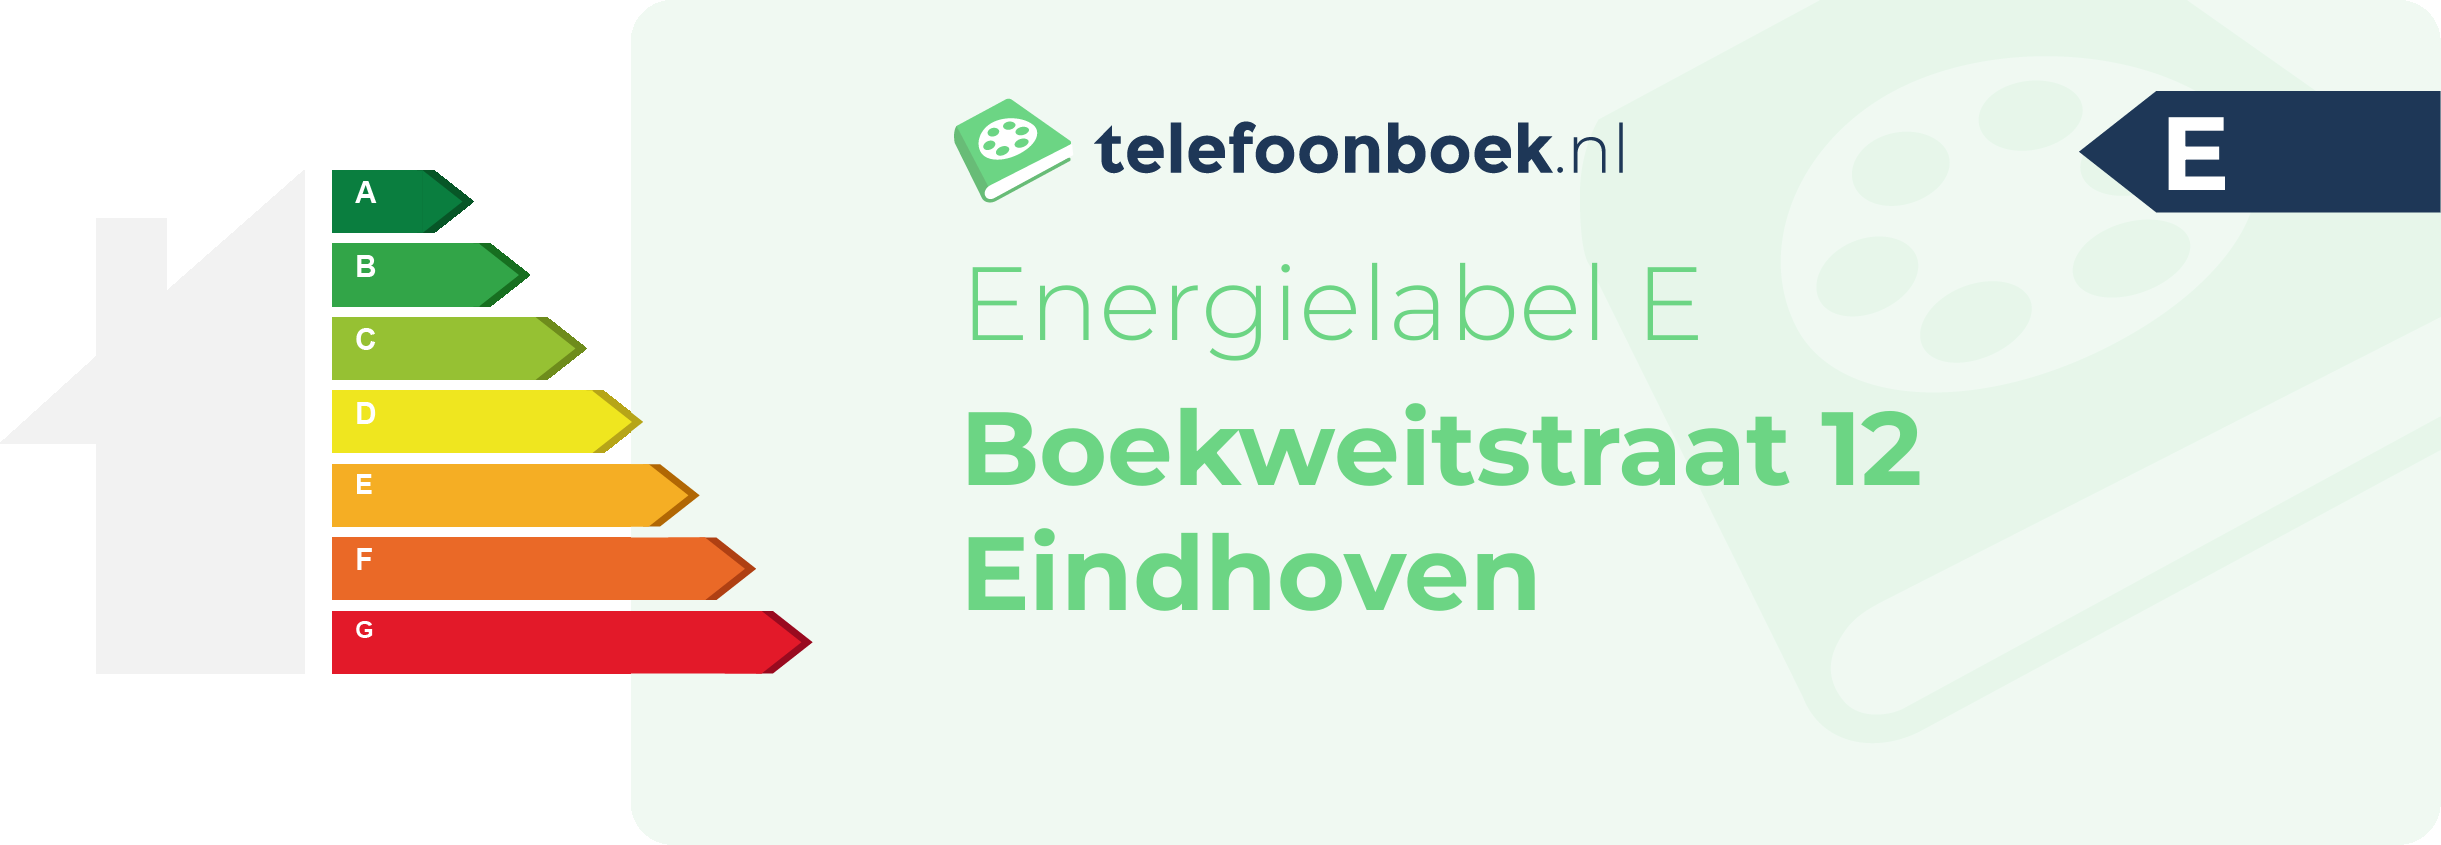 Energielabel Boekweitstraat 12 Eindhoven